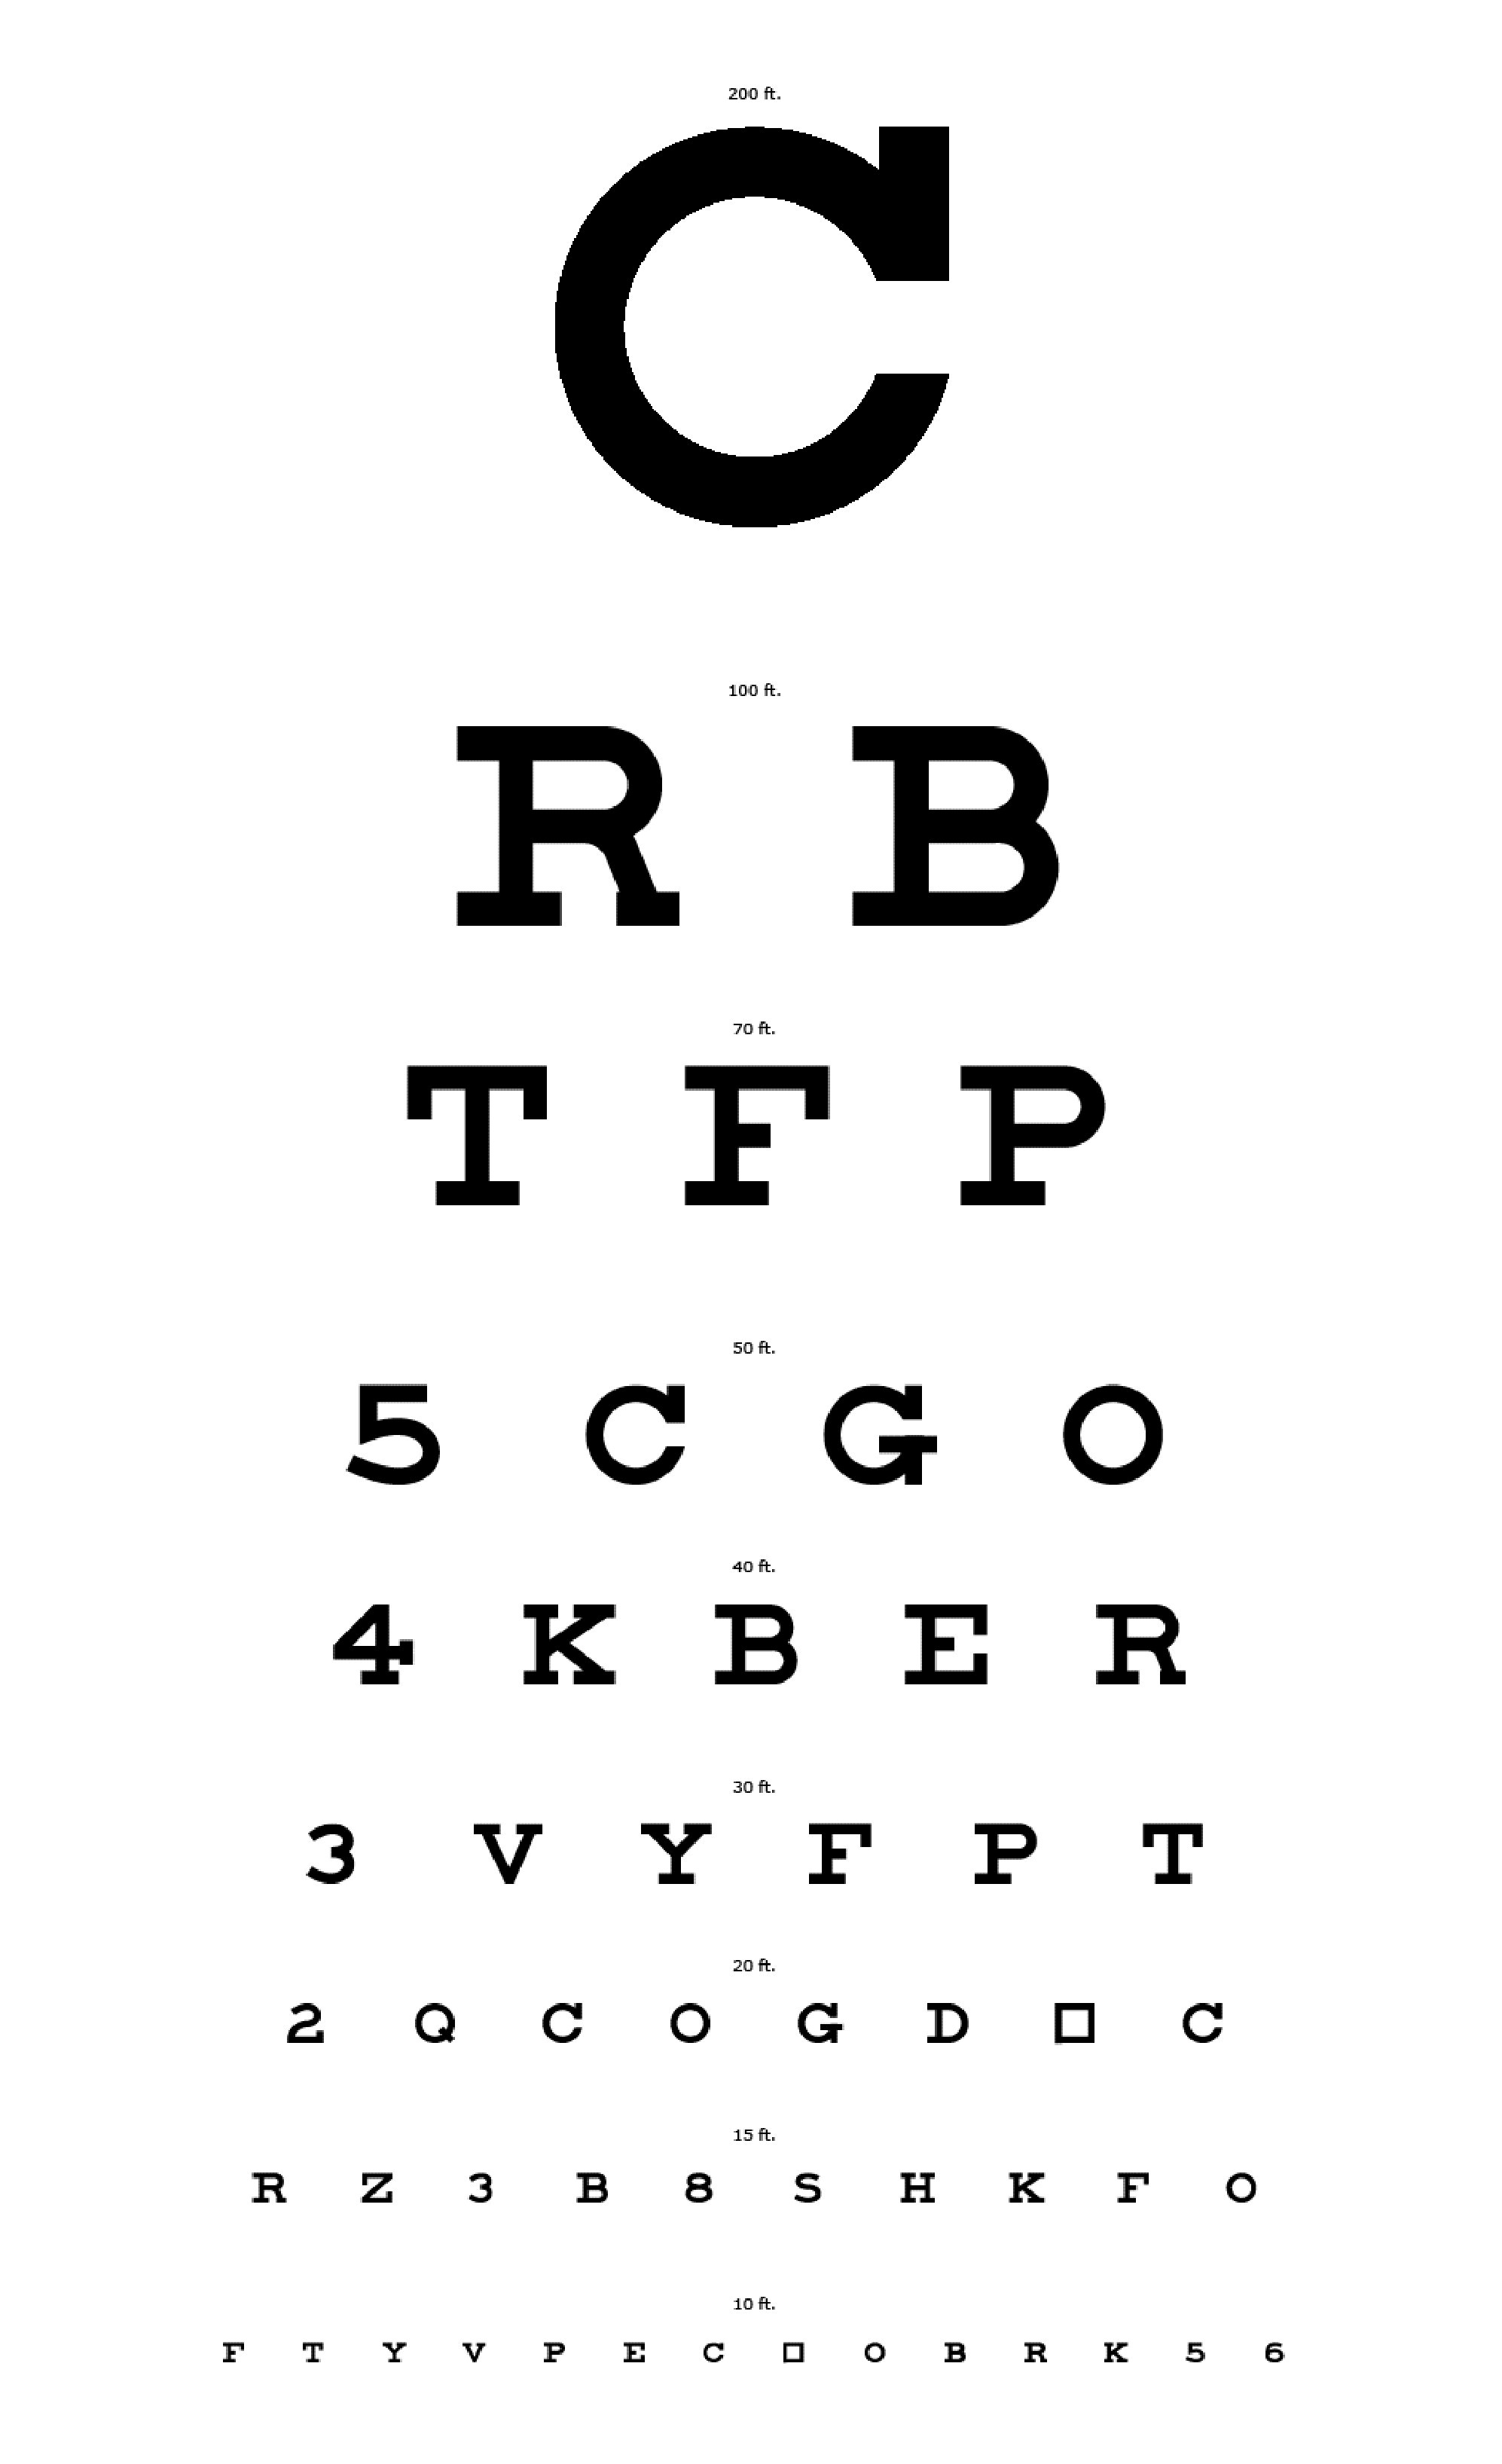  Big C Eyechart Print Large or Small for Far or Close Eyesight